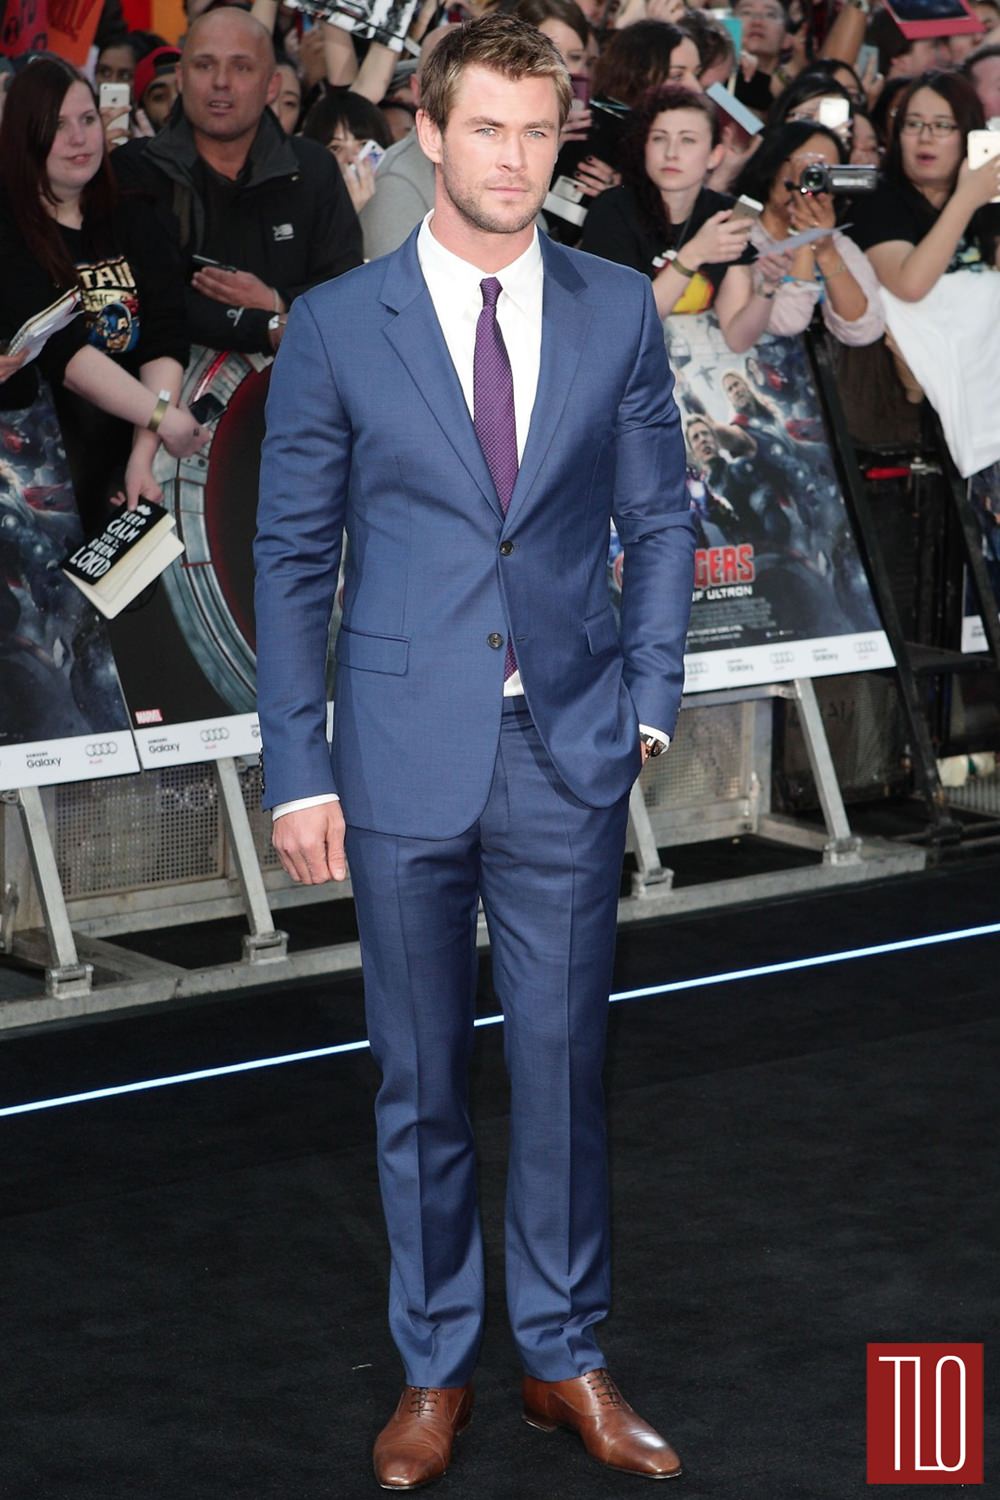 Avengers-London-Movie-Premiere-Red-Carpet-Fashion-Tom-Lorenzo-Site-TLO (1)